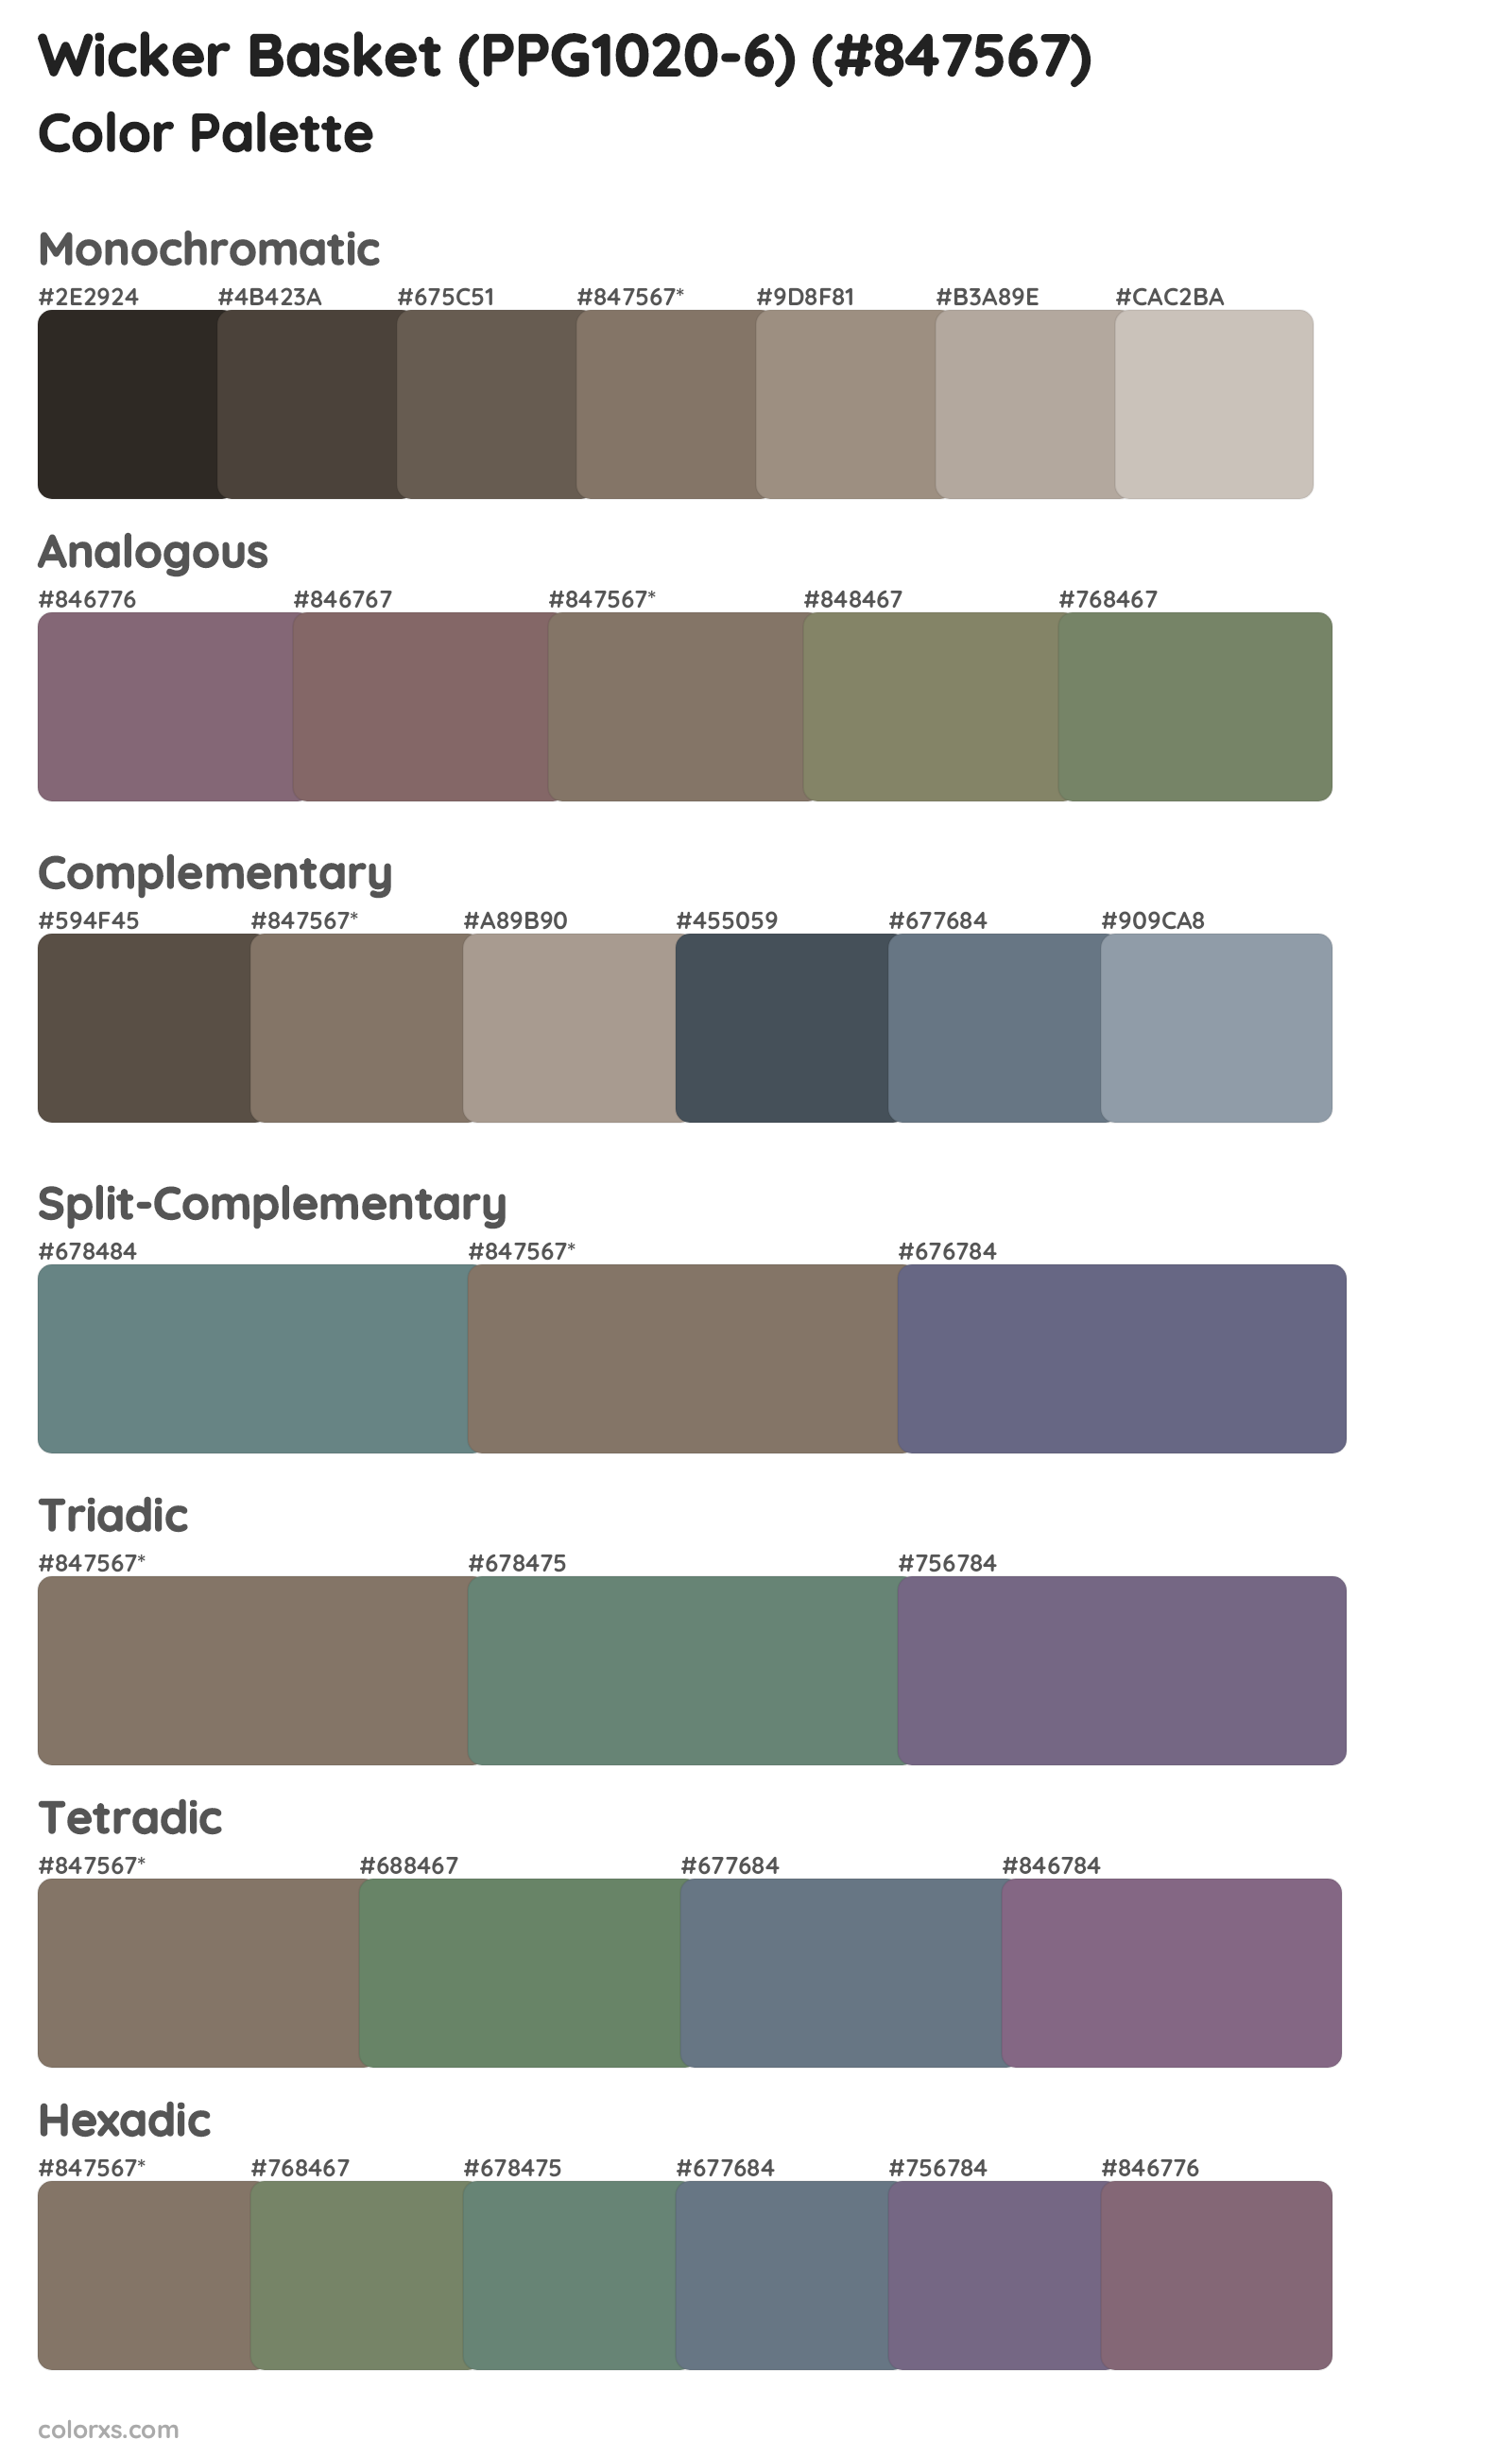 Wicker Basket (PPG1020-6) Color Scheme Palettes